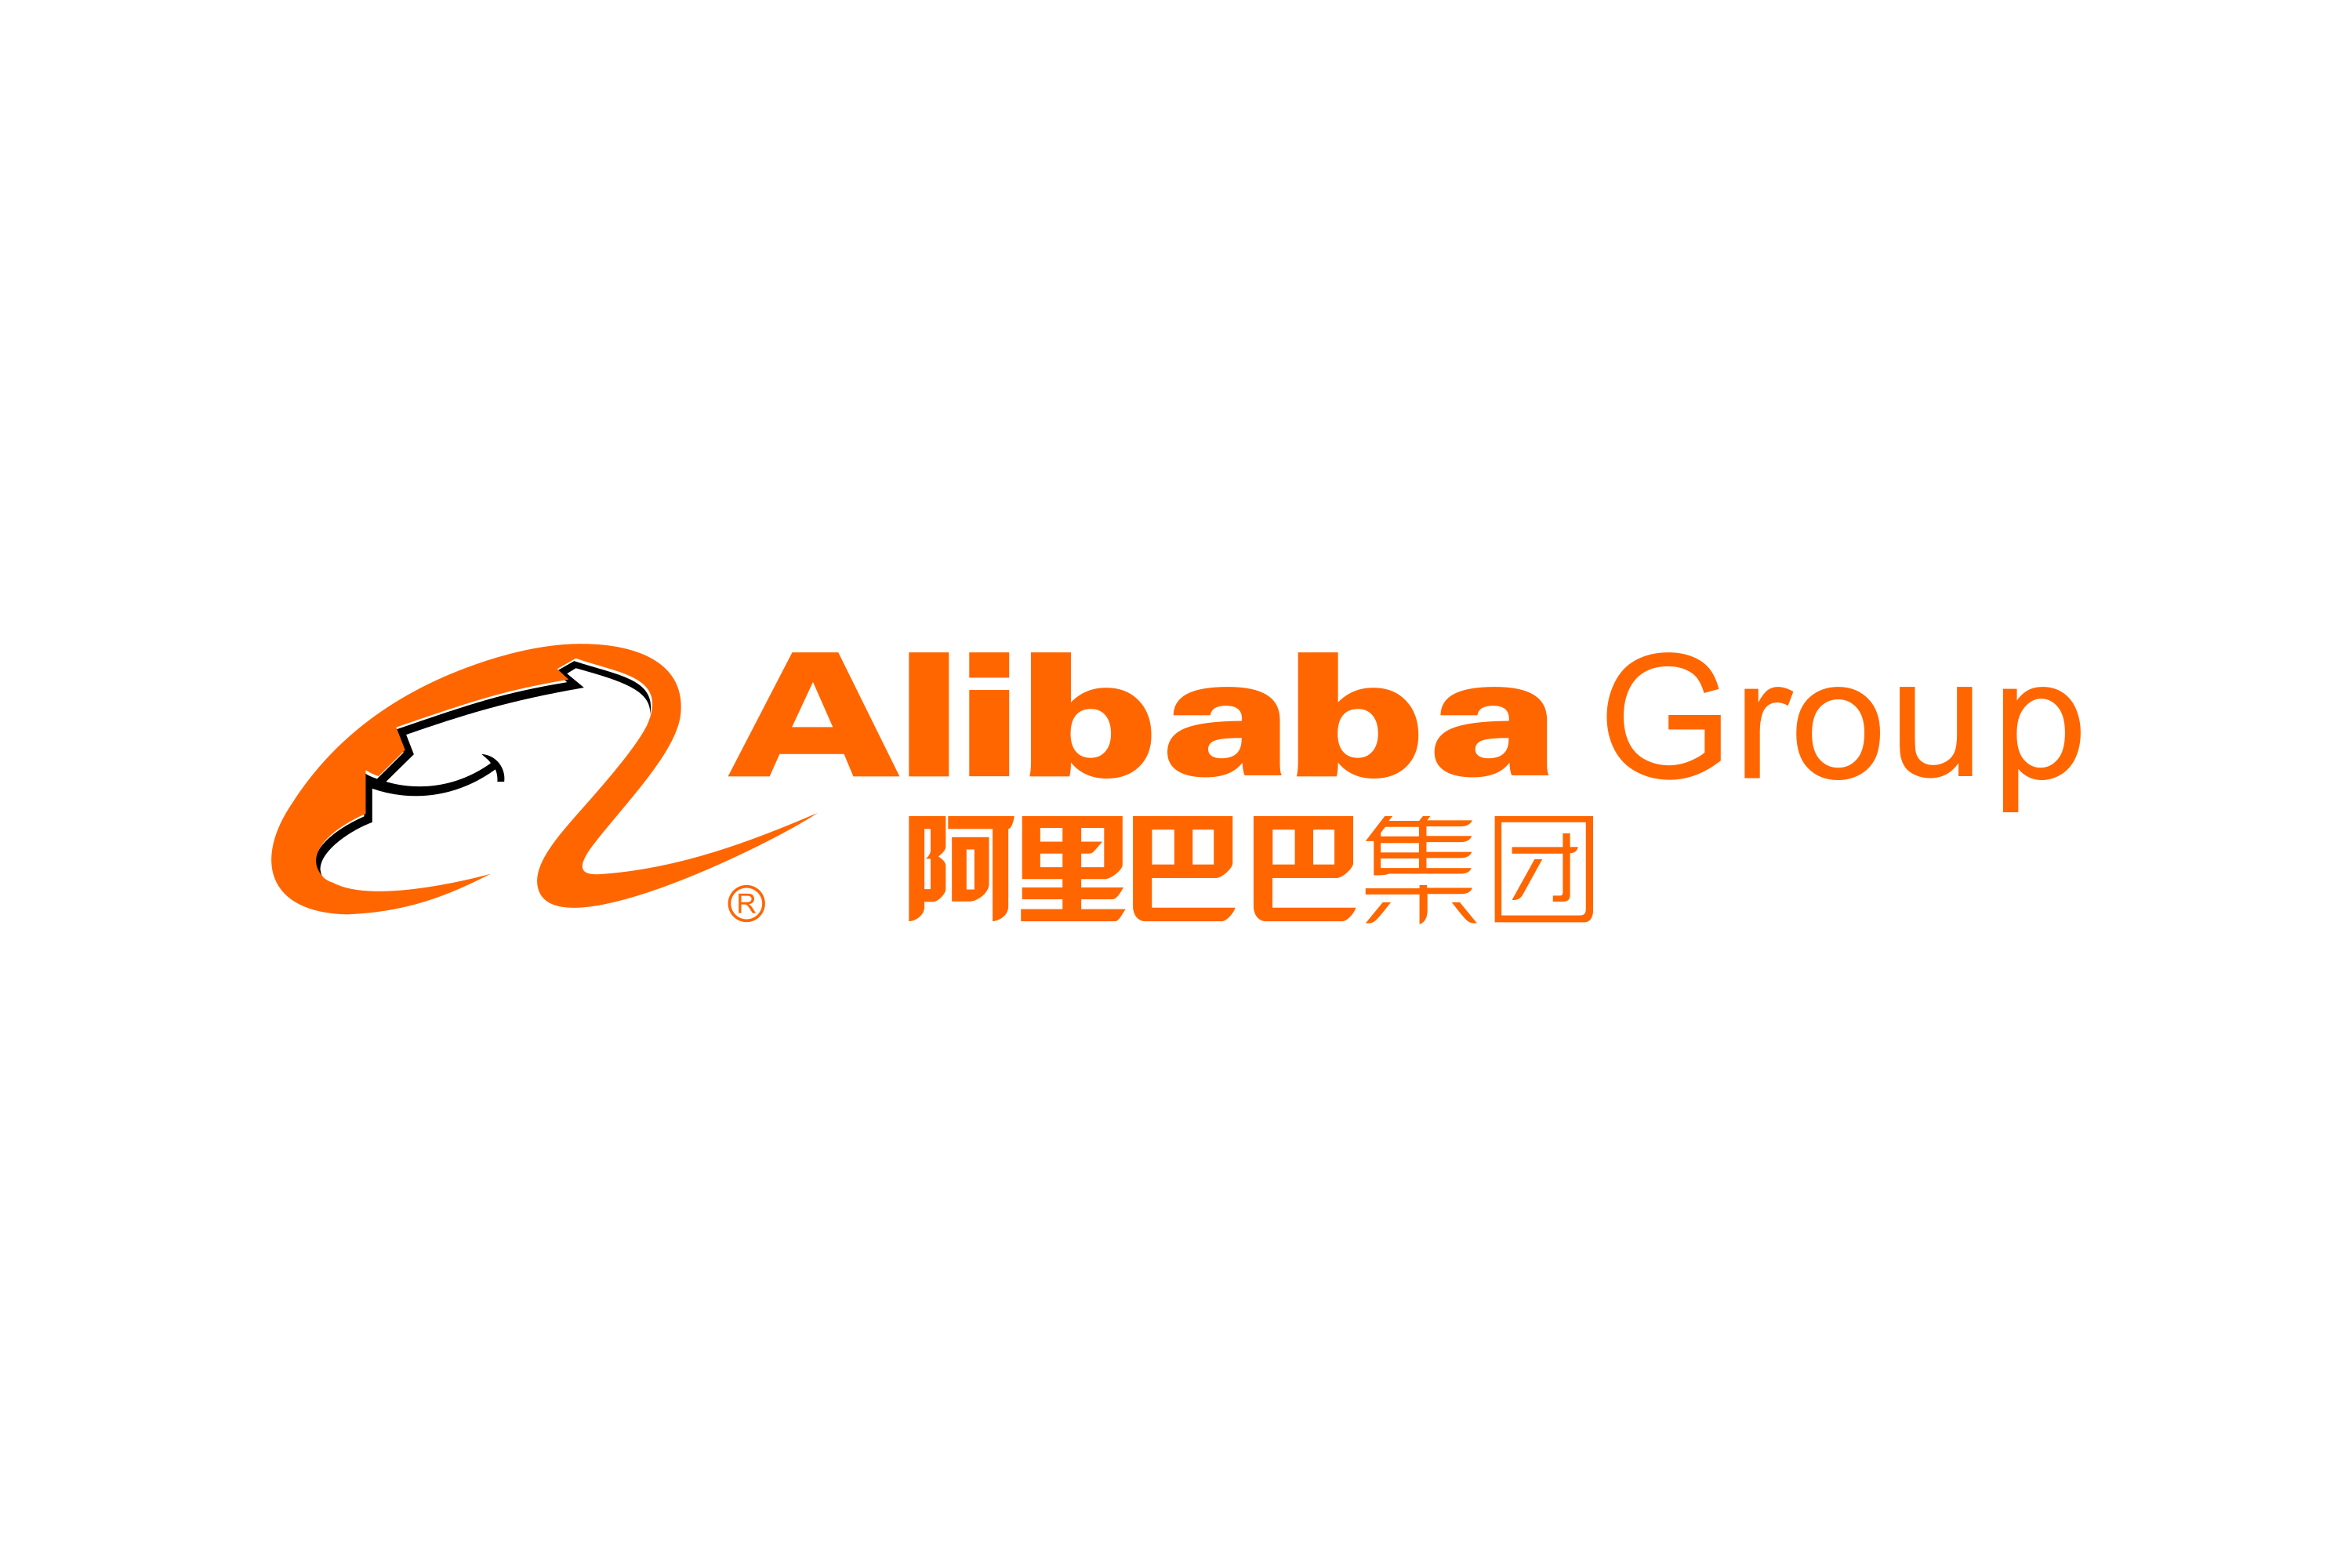 Download Alibaba Group Logo in SVG Vector or PNG File Format - Logo.wine